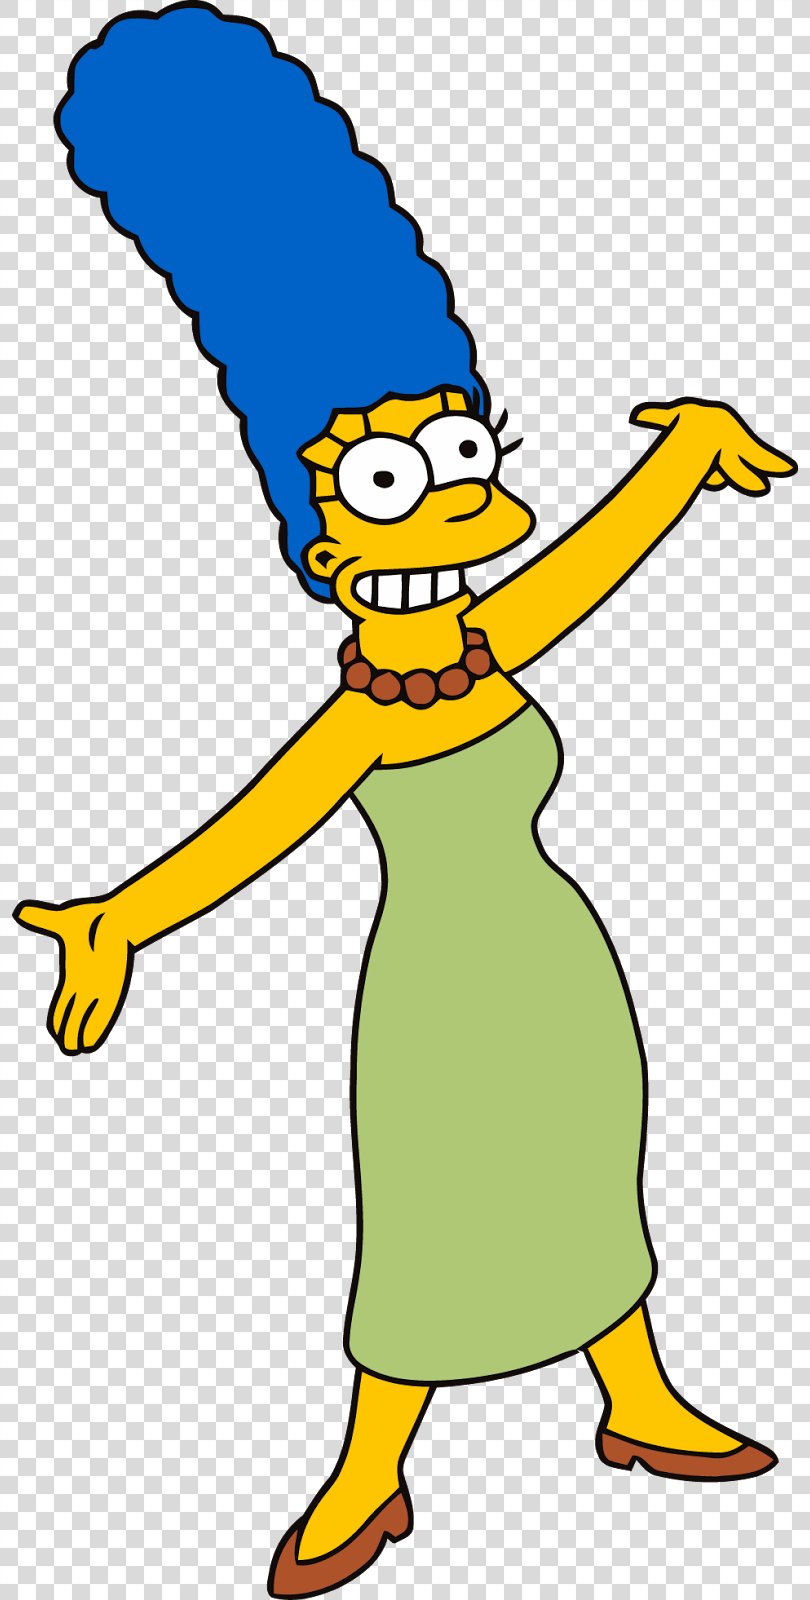 Marge Simpson Maggie Simpson Homer Simpson Lisa Simpson Bart Simpson, The Simpsons PNG